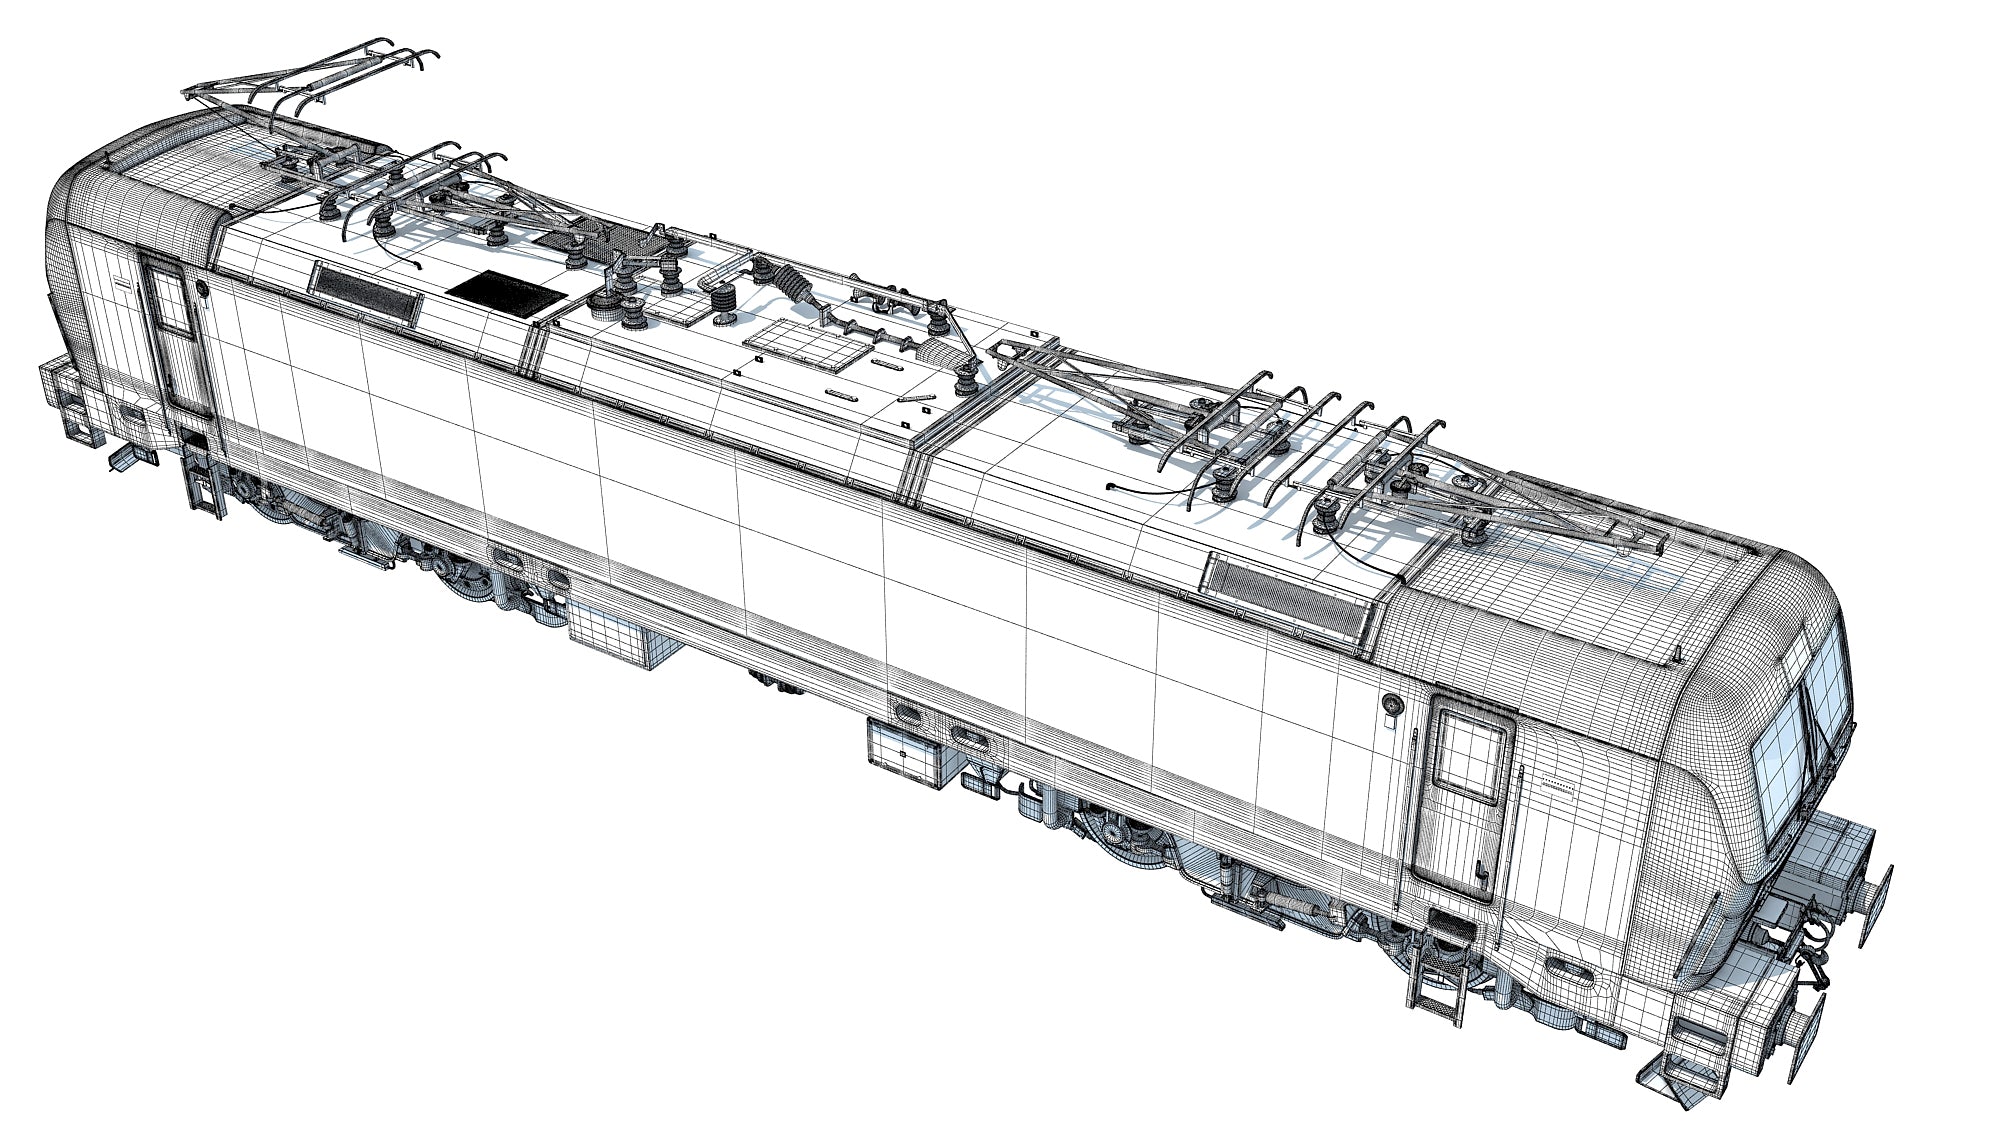 Siemens Vectron Locomotive Austrian Railways